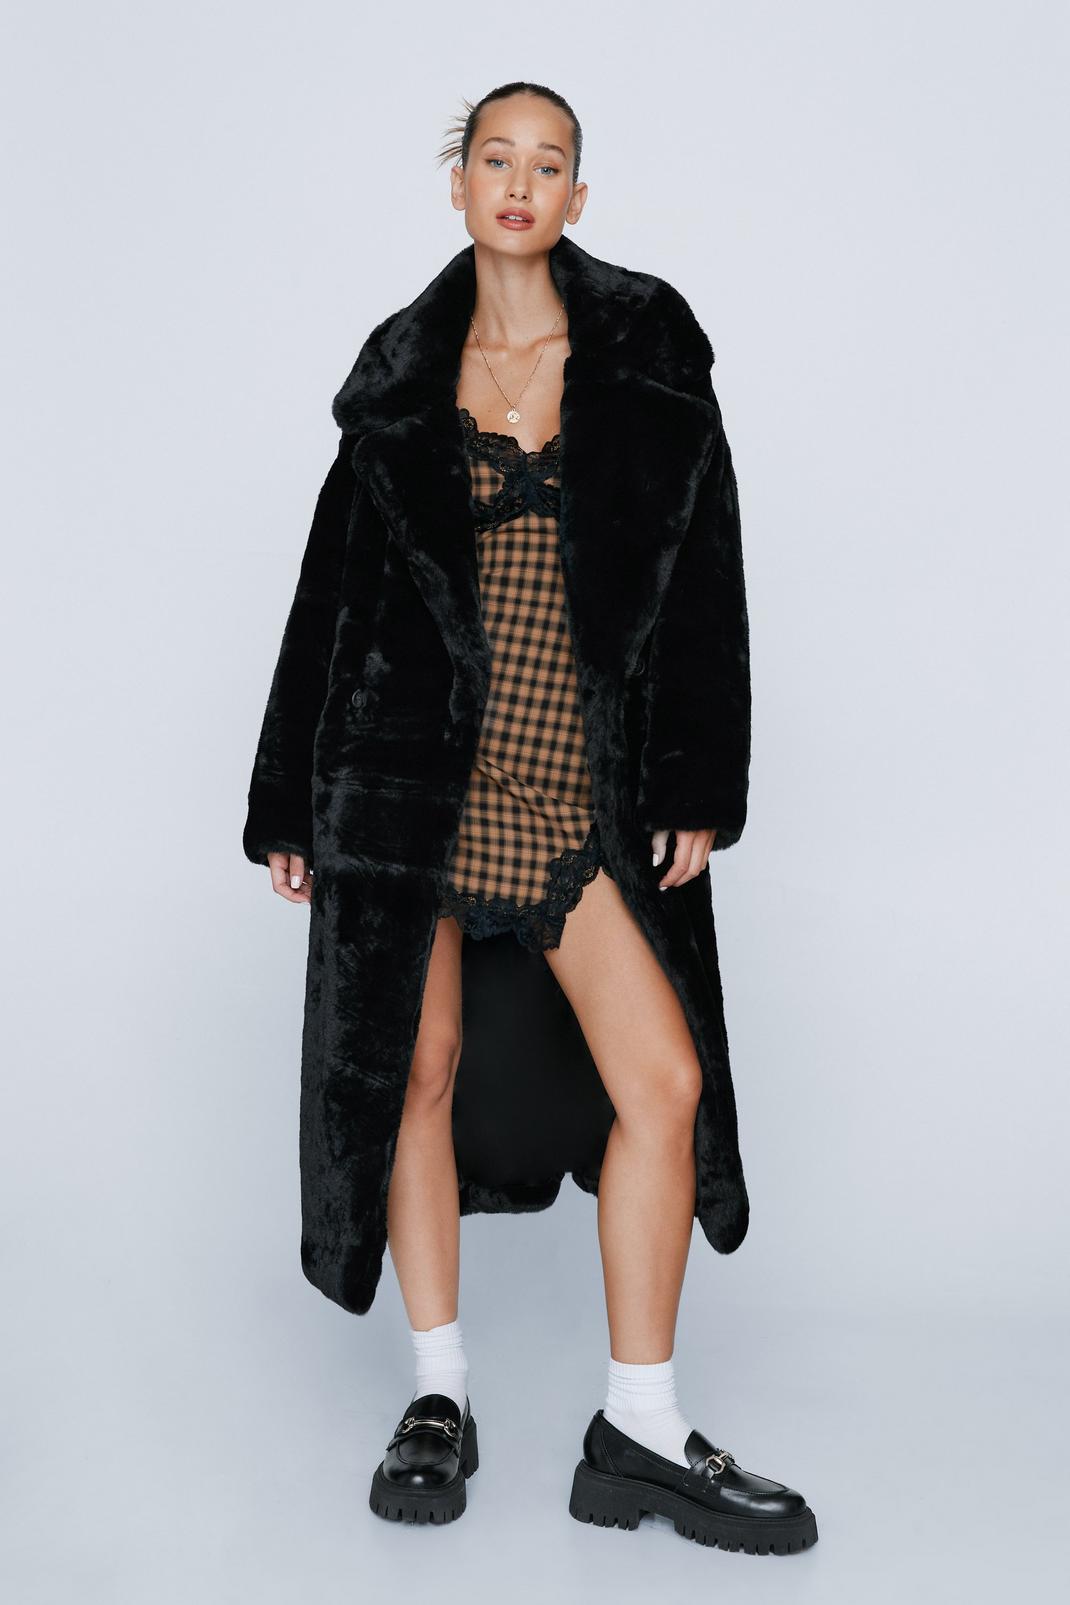 Women's Petite Faux-Fur Coat